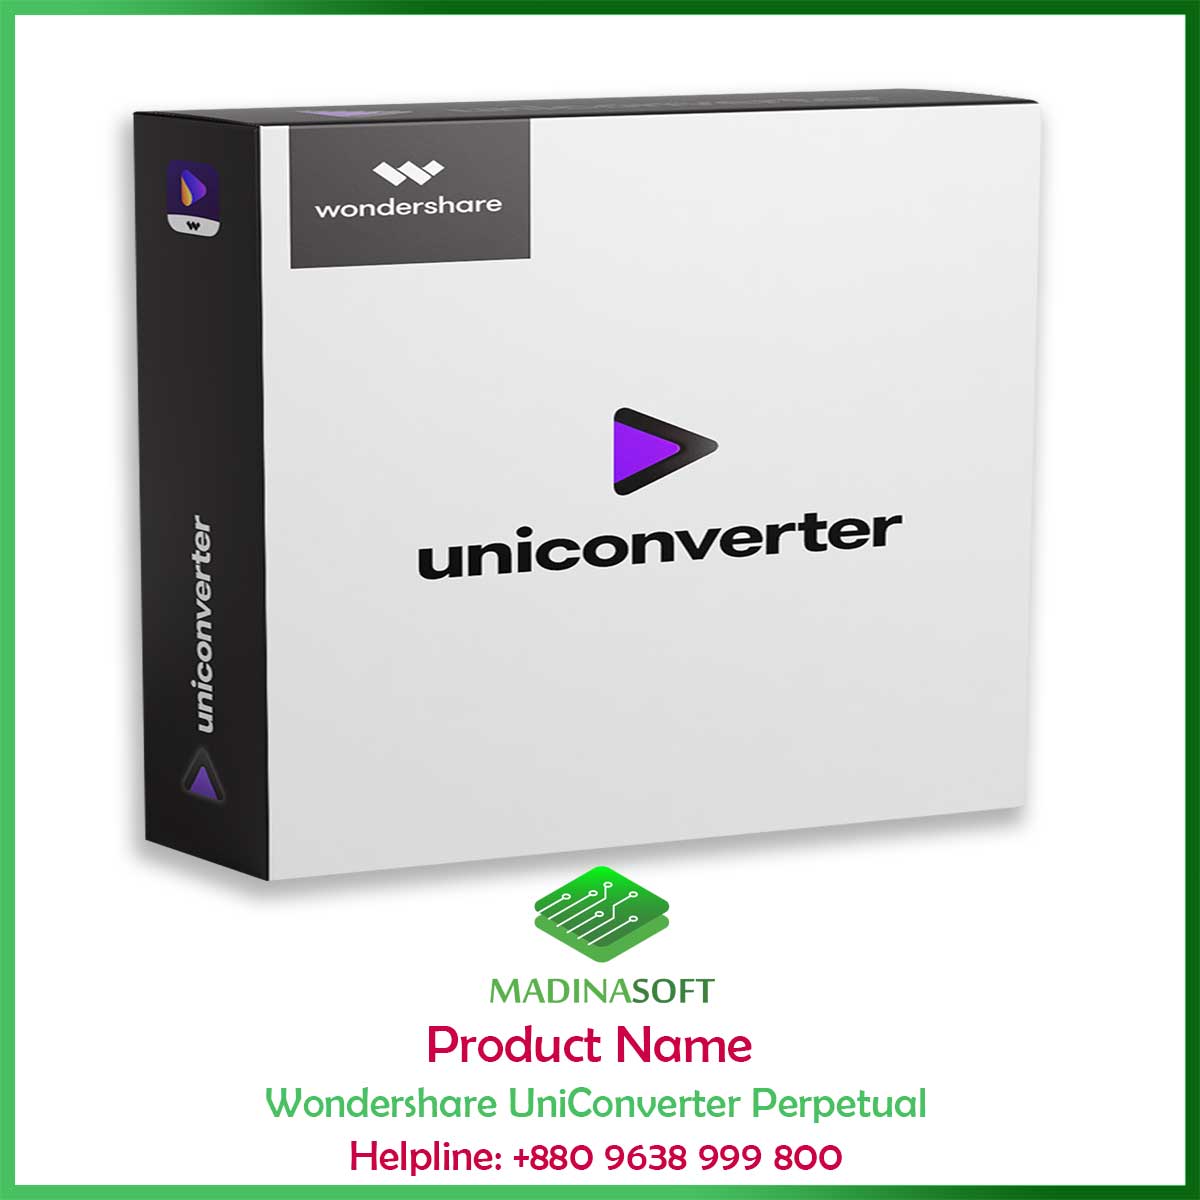 Wondershare UniConverter Perpetual